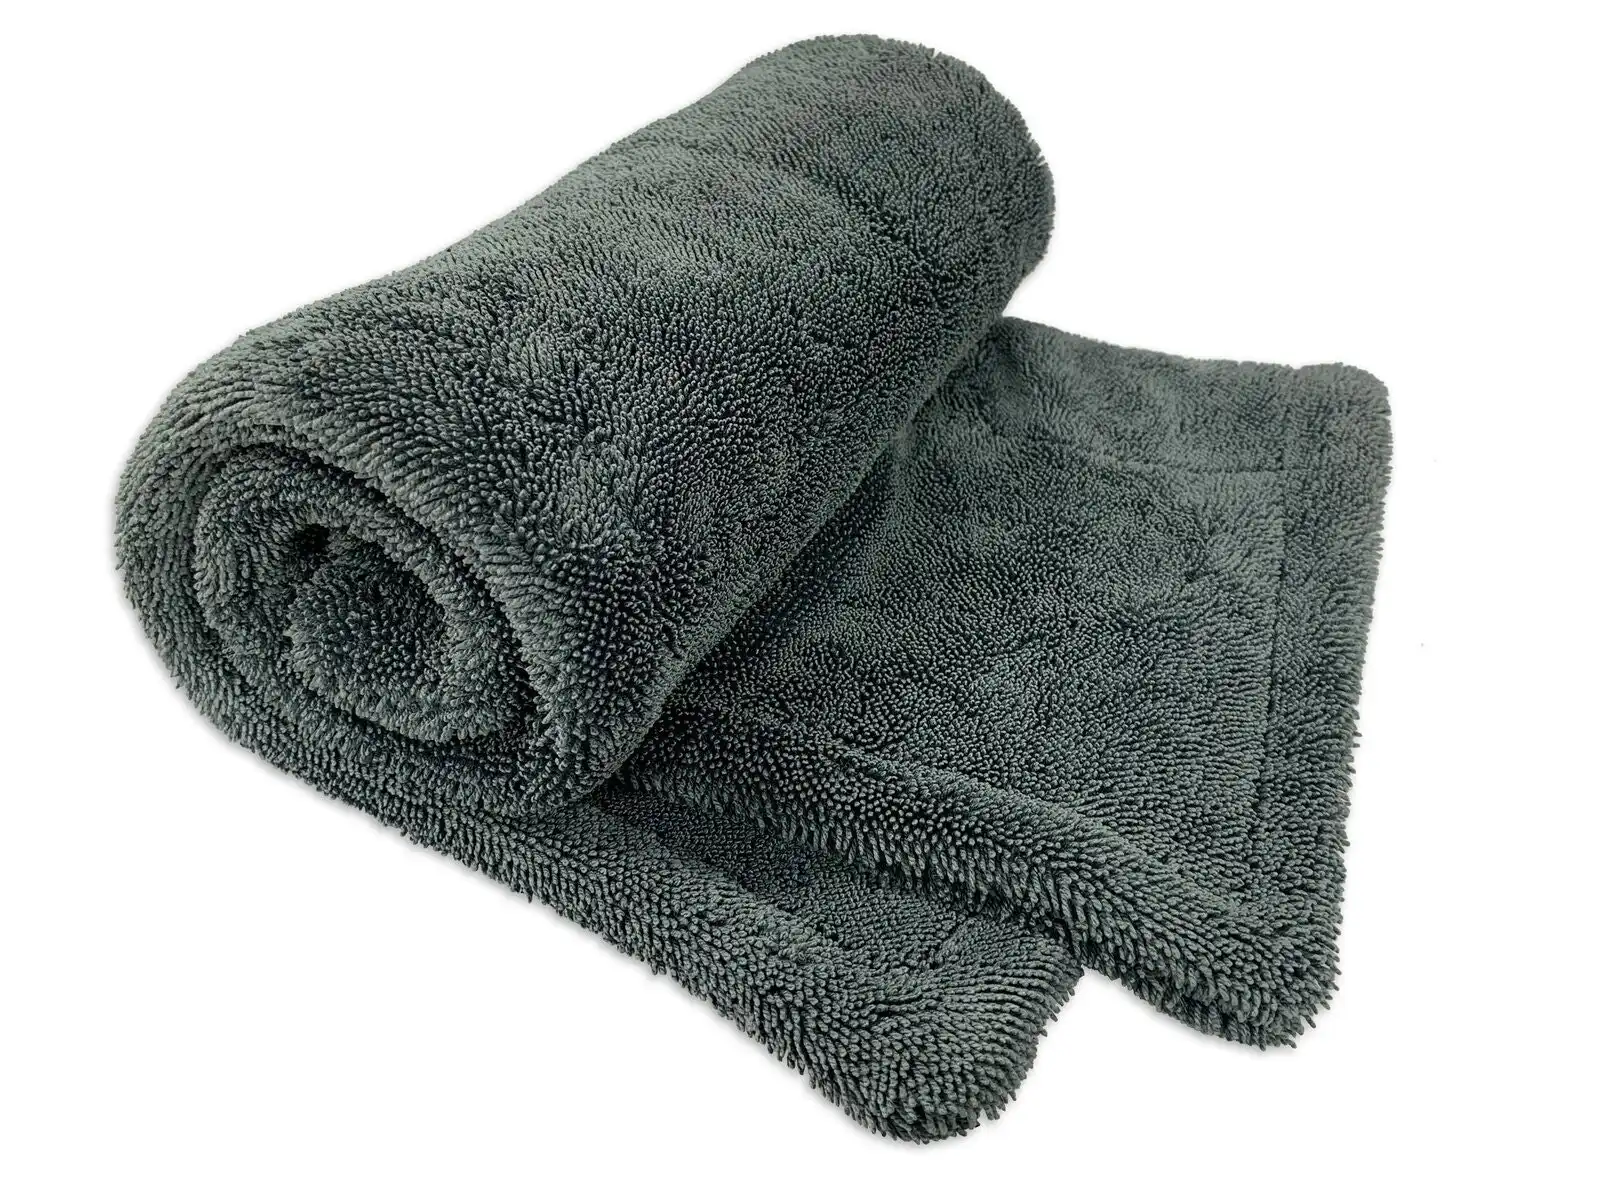 Seaman Marine "The Finishing Towel" Premium Quality Microfibre Polishing Towel